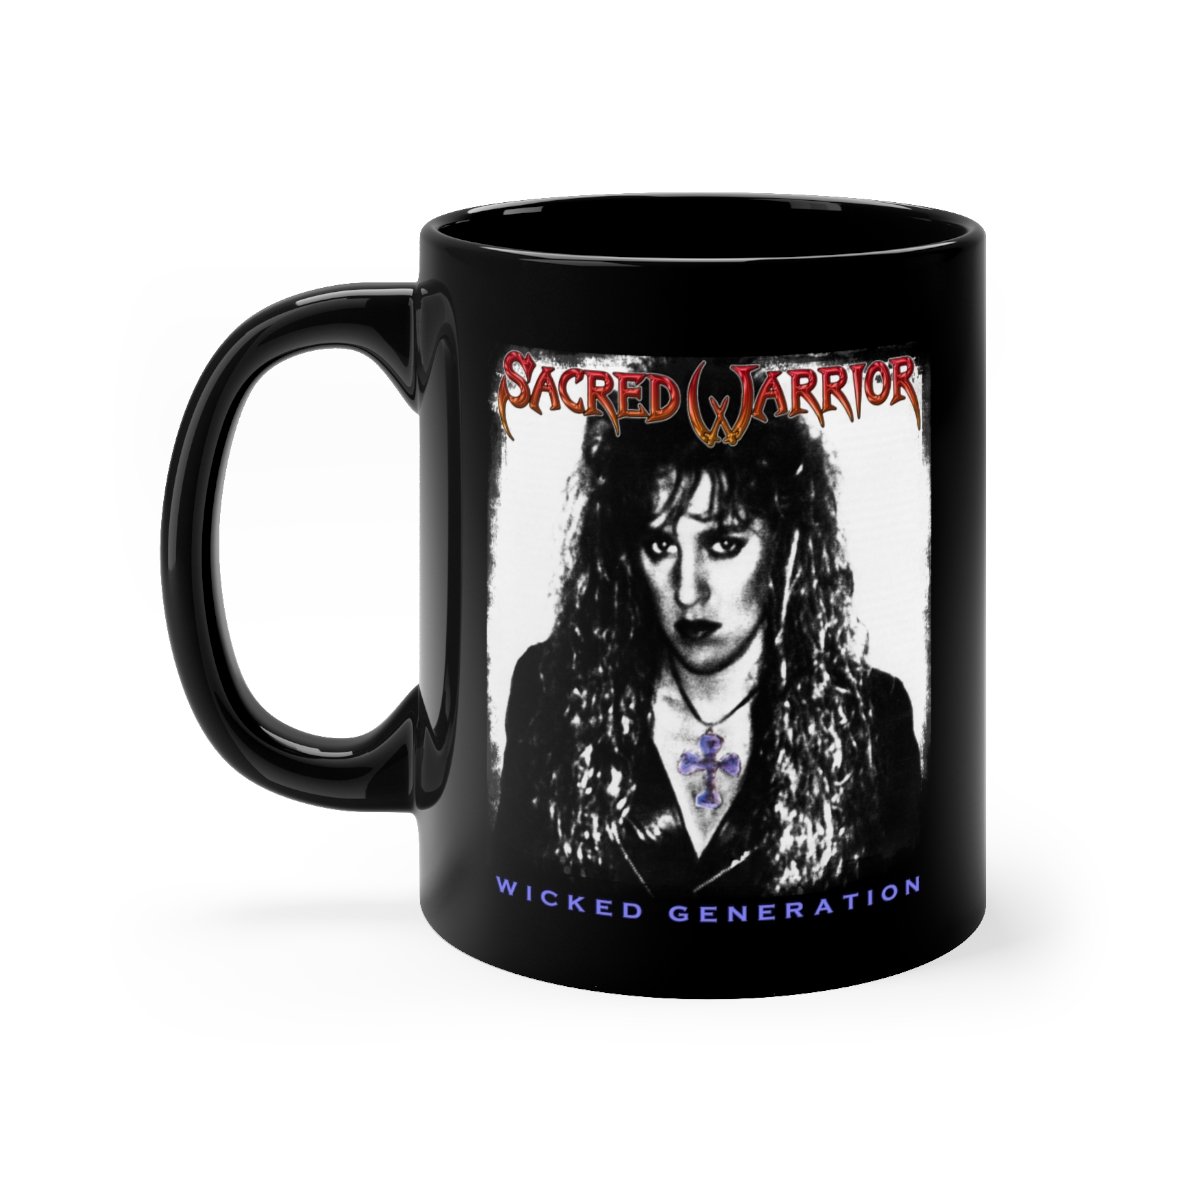 Sacred Warrior – Wicked Generation 11oz Black mug